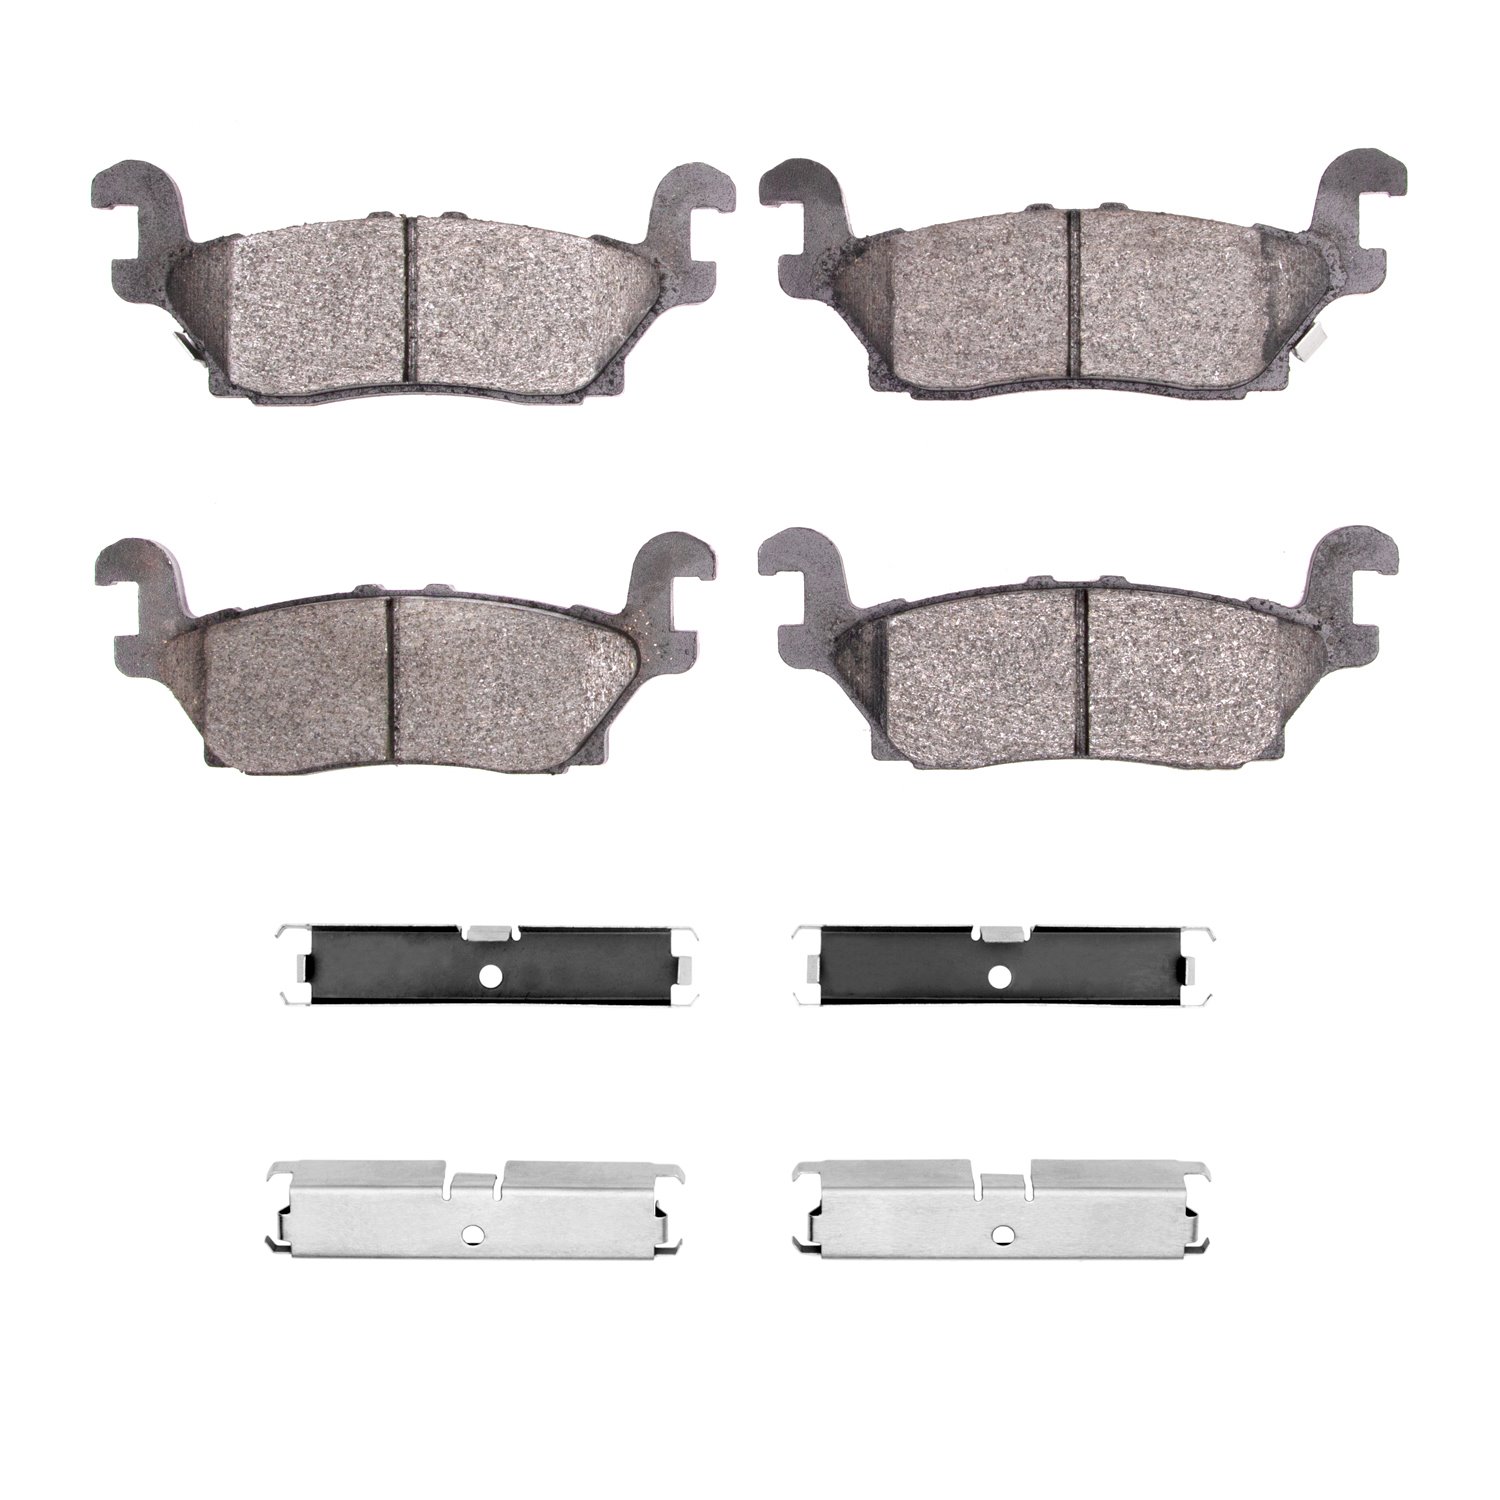 1551-1120-01 5000 Advanced Ceramic Brake Pads & Hardware Kit, 2006-2010 GM, Position: Rear